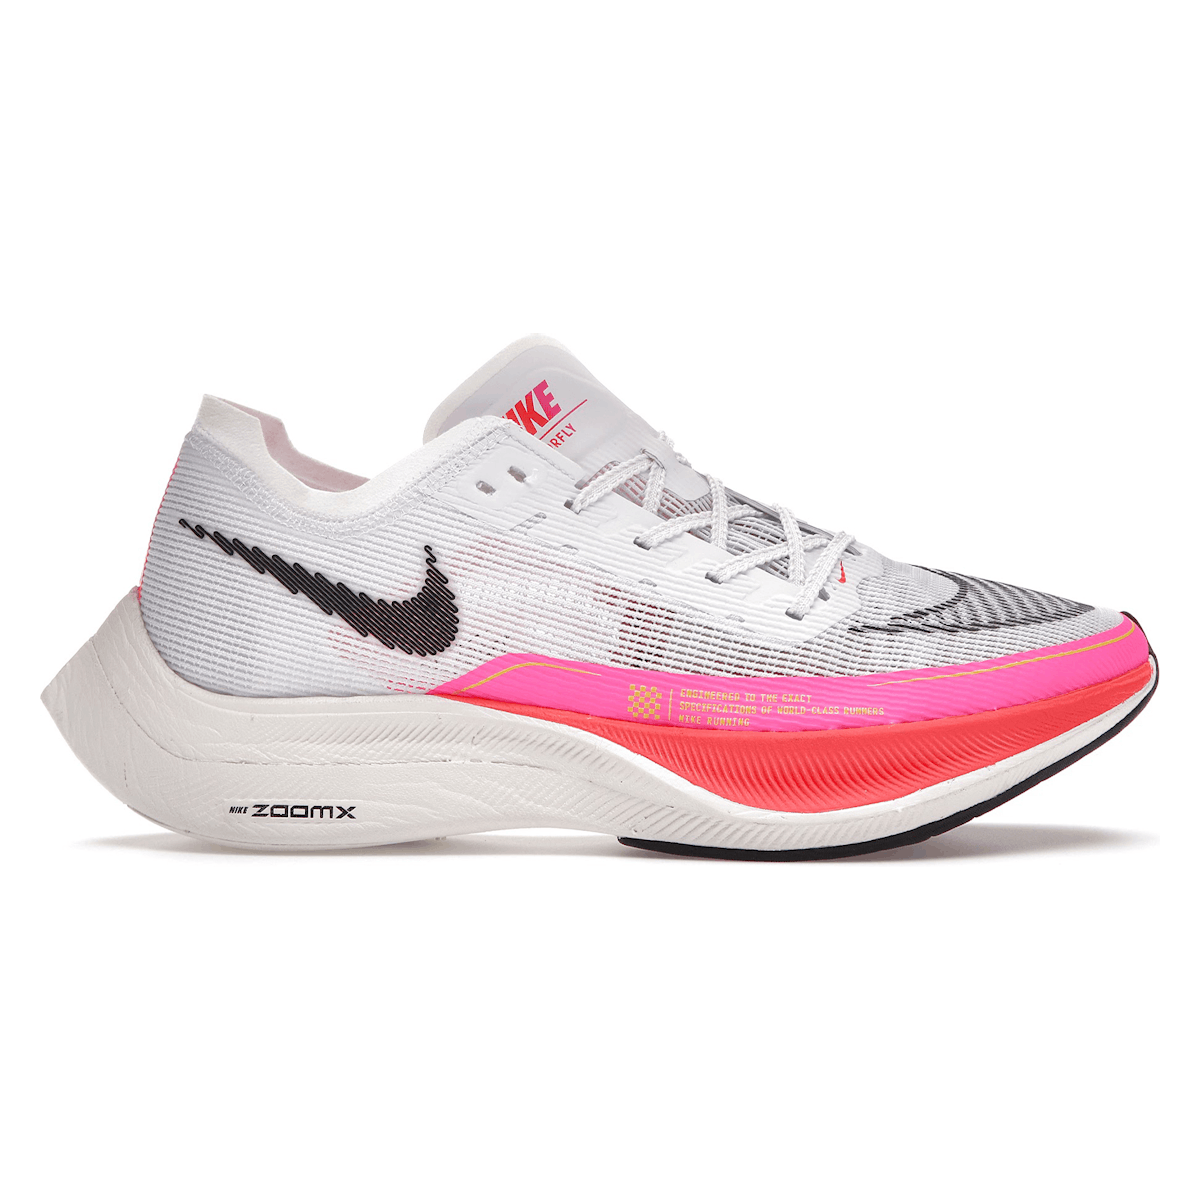 Nike ZoomX Vaporfly Next% 2 White Pink